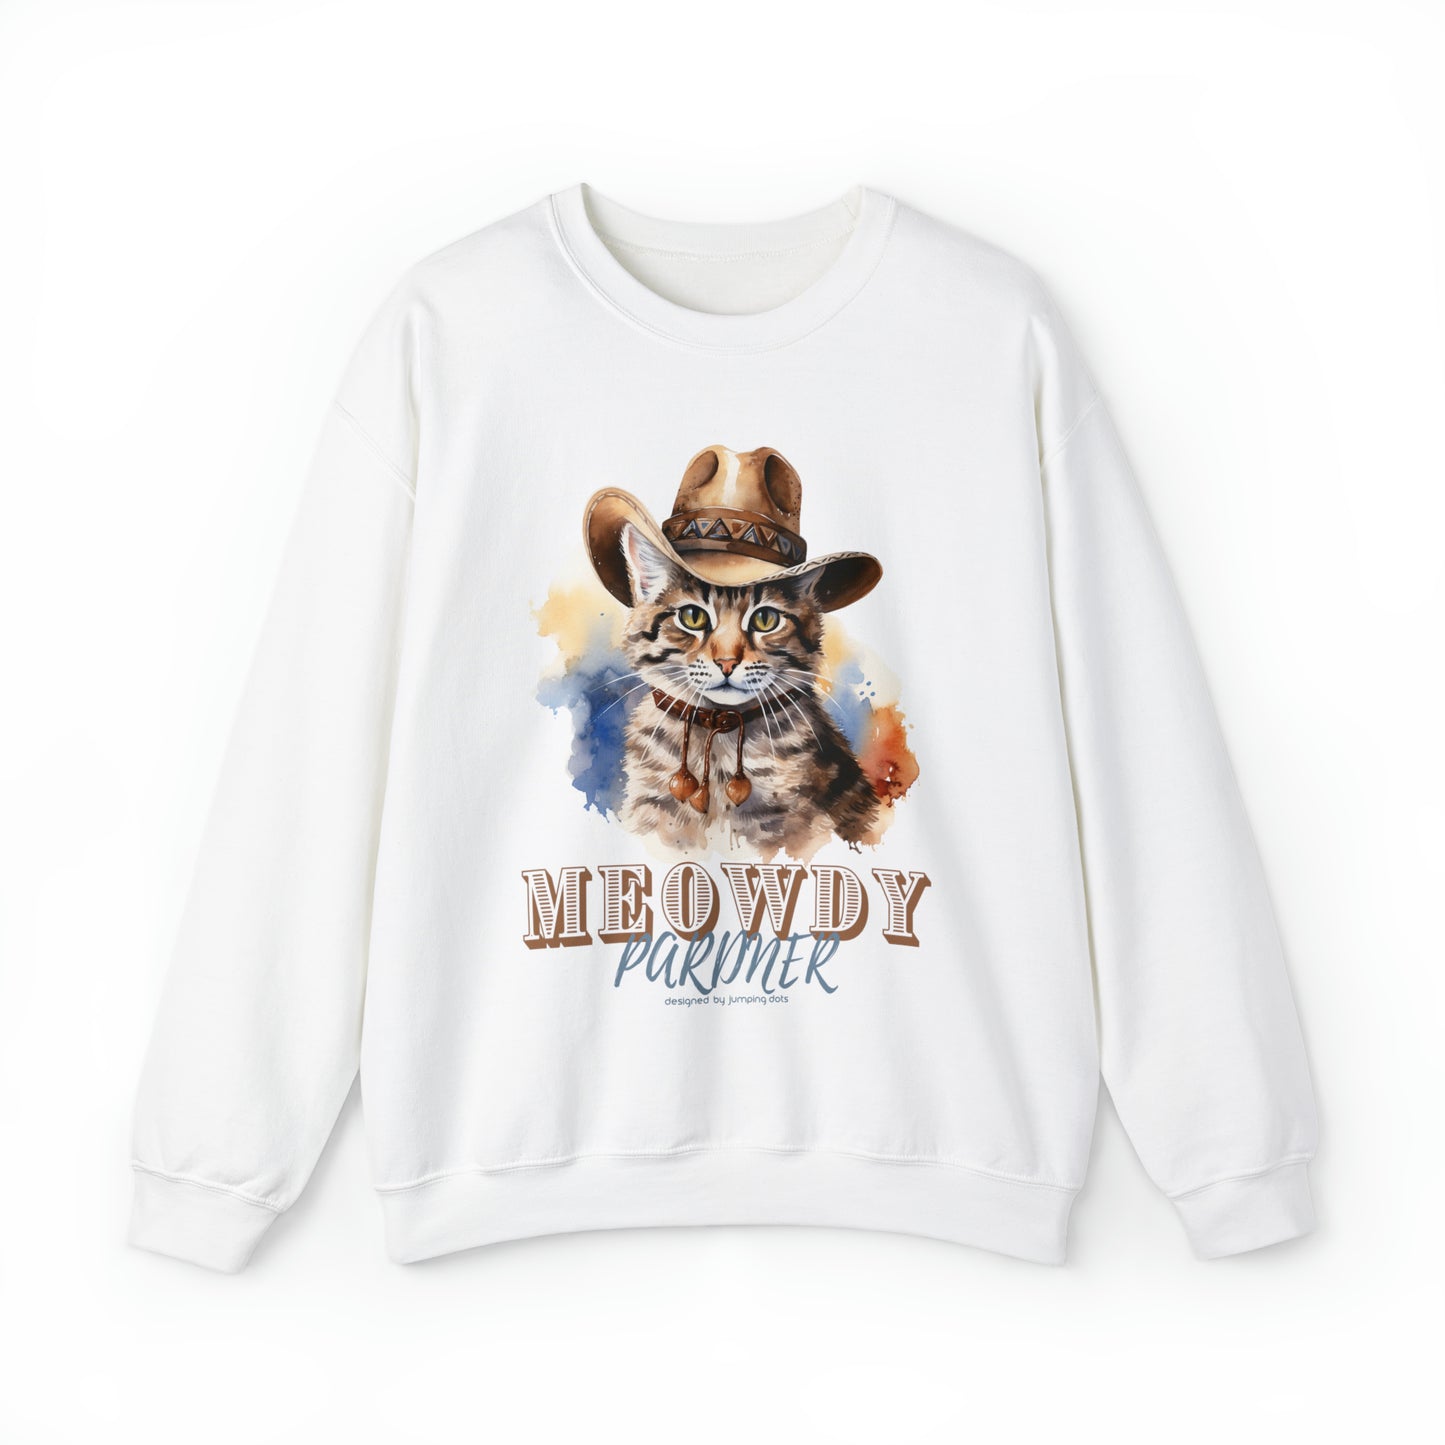 Vintage Funny Cat Sweatshirt for Autumn Adventures